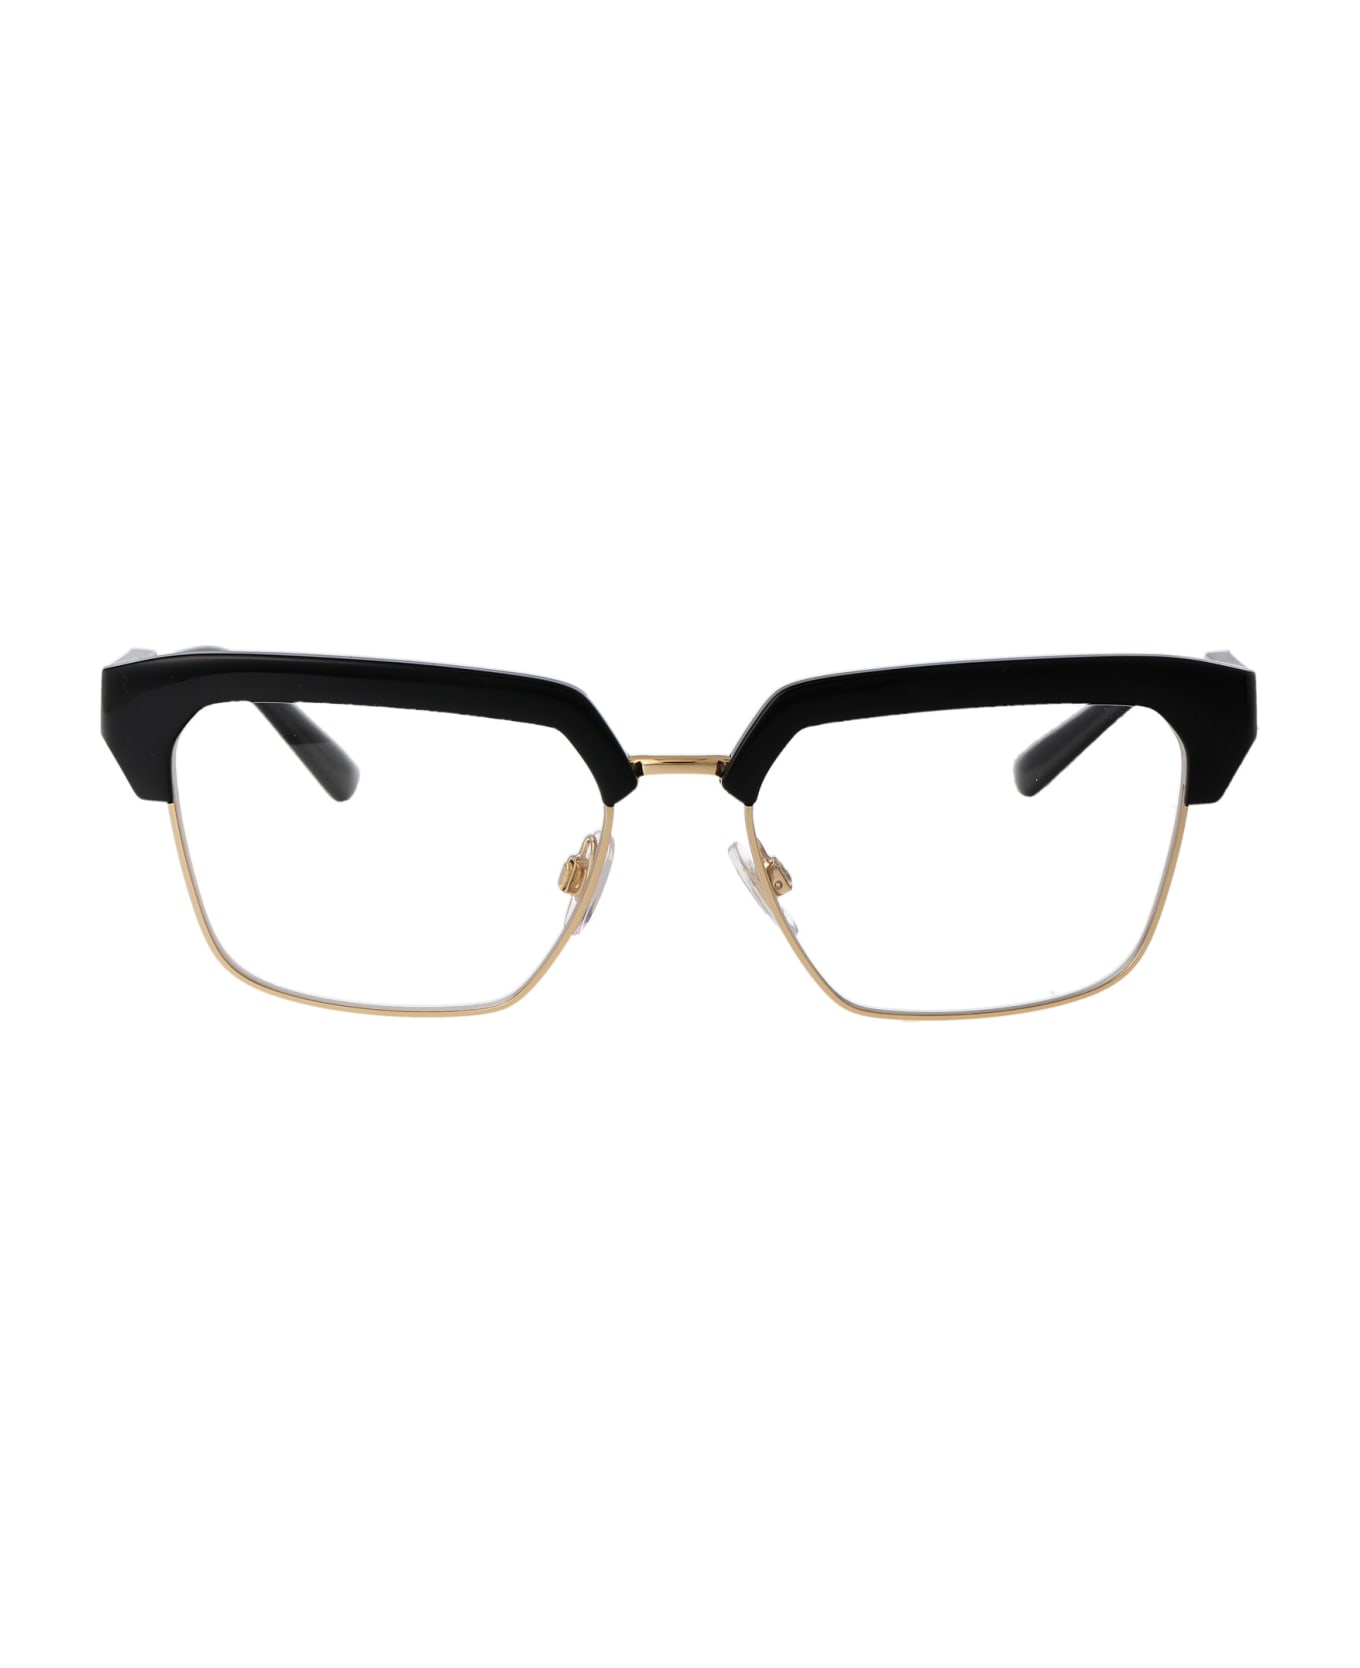 Dolce & Gabbana Eyewear 0dg5103 Glasses - 501 BLACK